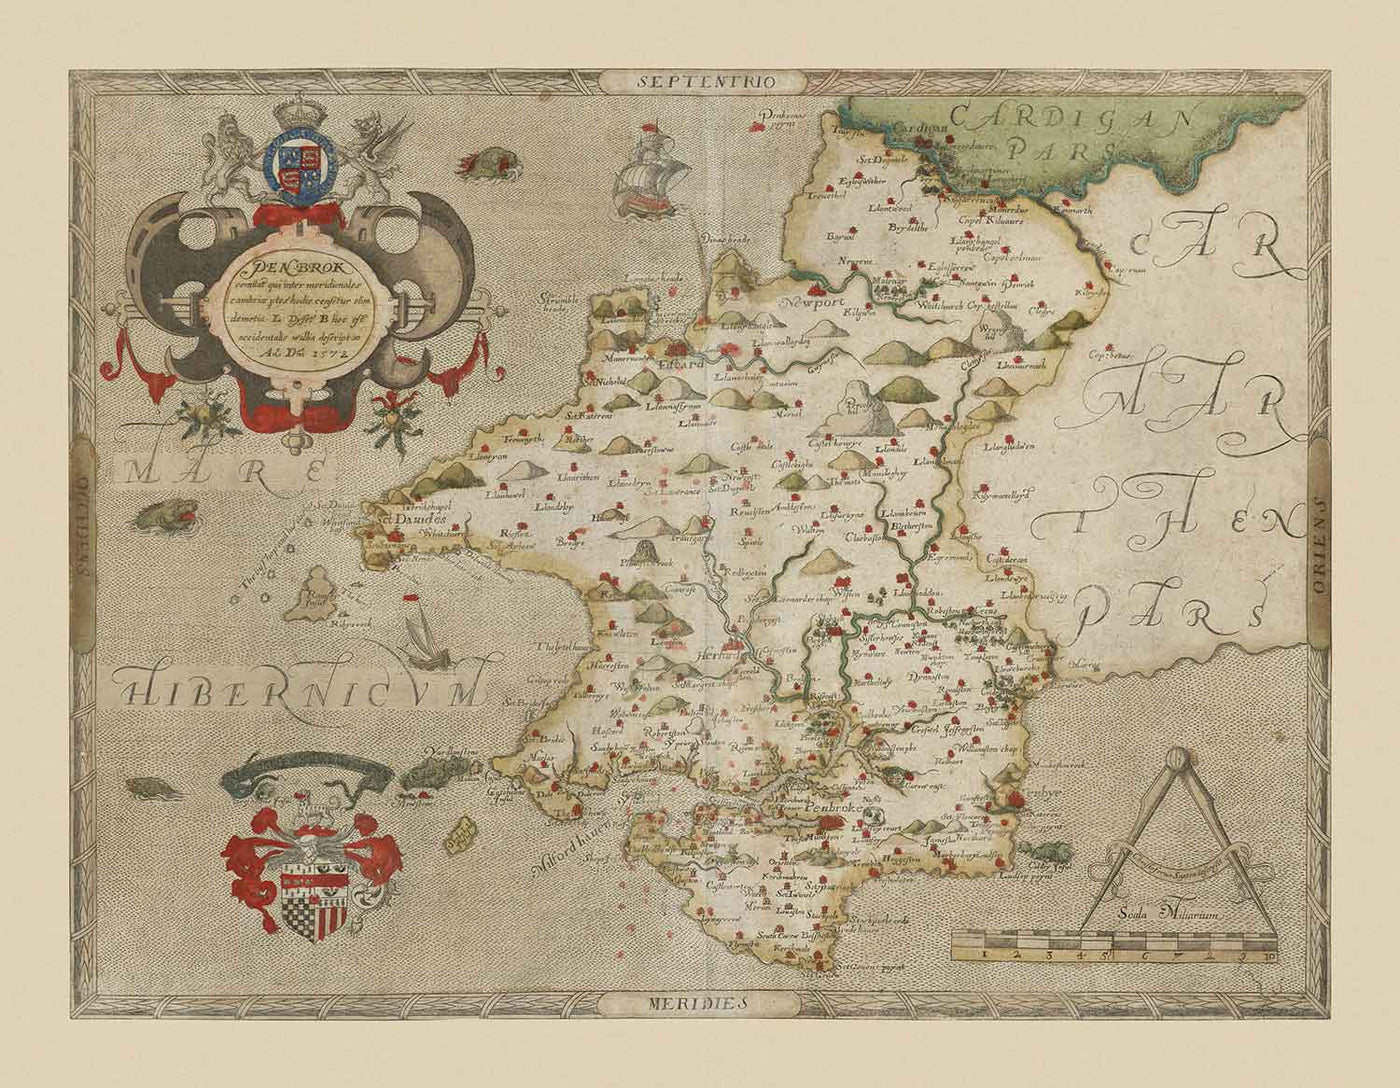 Antiguo mapa de Pembrokeshire, Gales en 1578 por Christopher Saxton - Pembroke, Newport, Cardigan, Fishguard, Haverfordwest